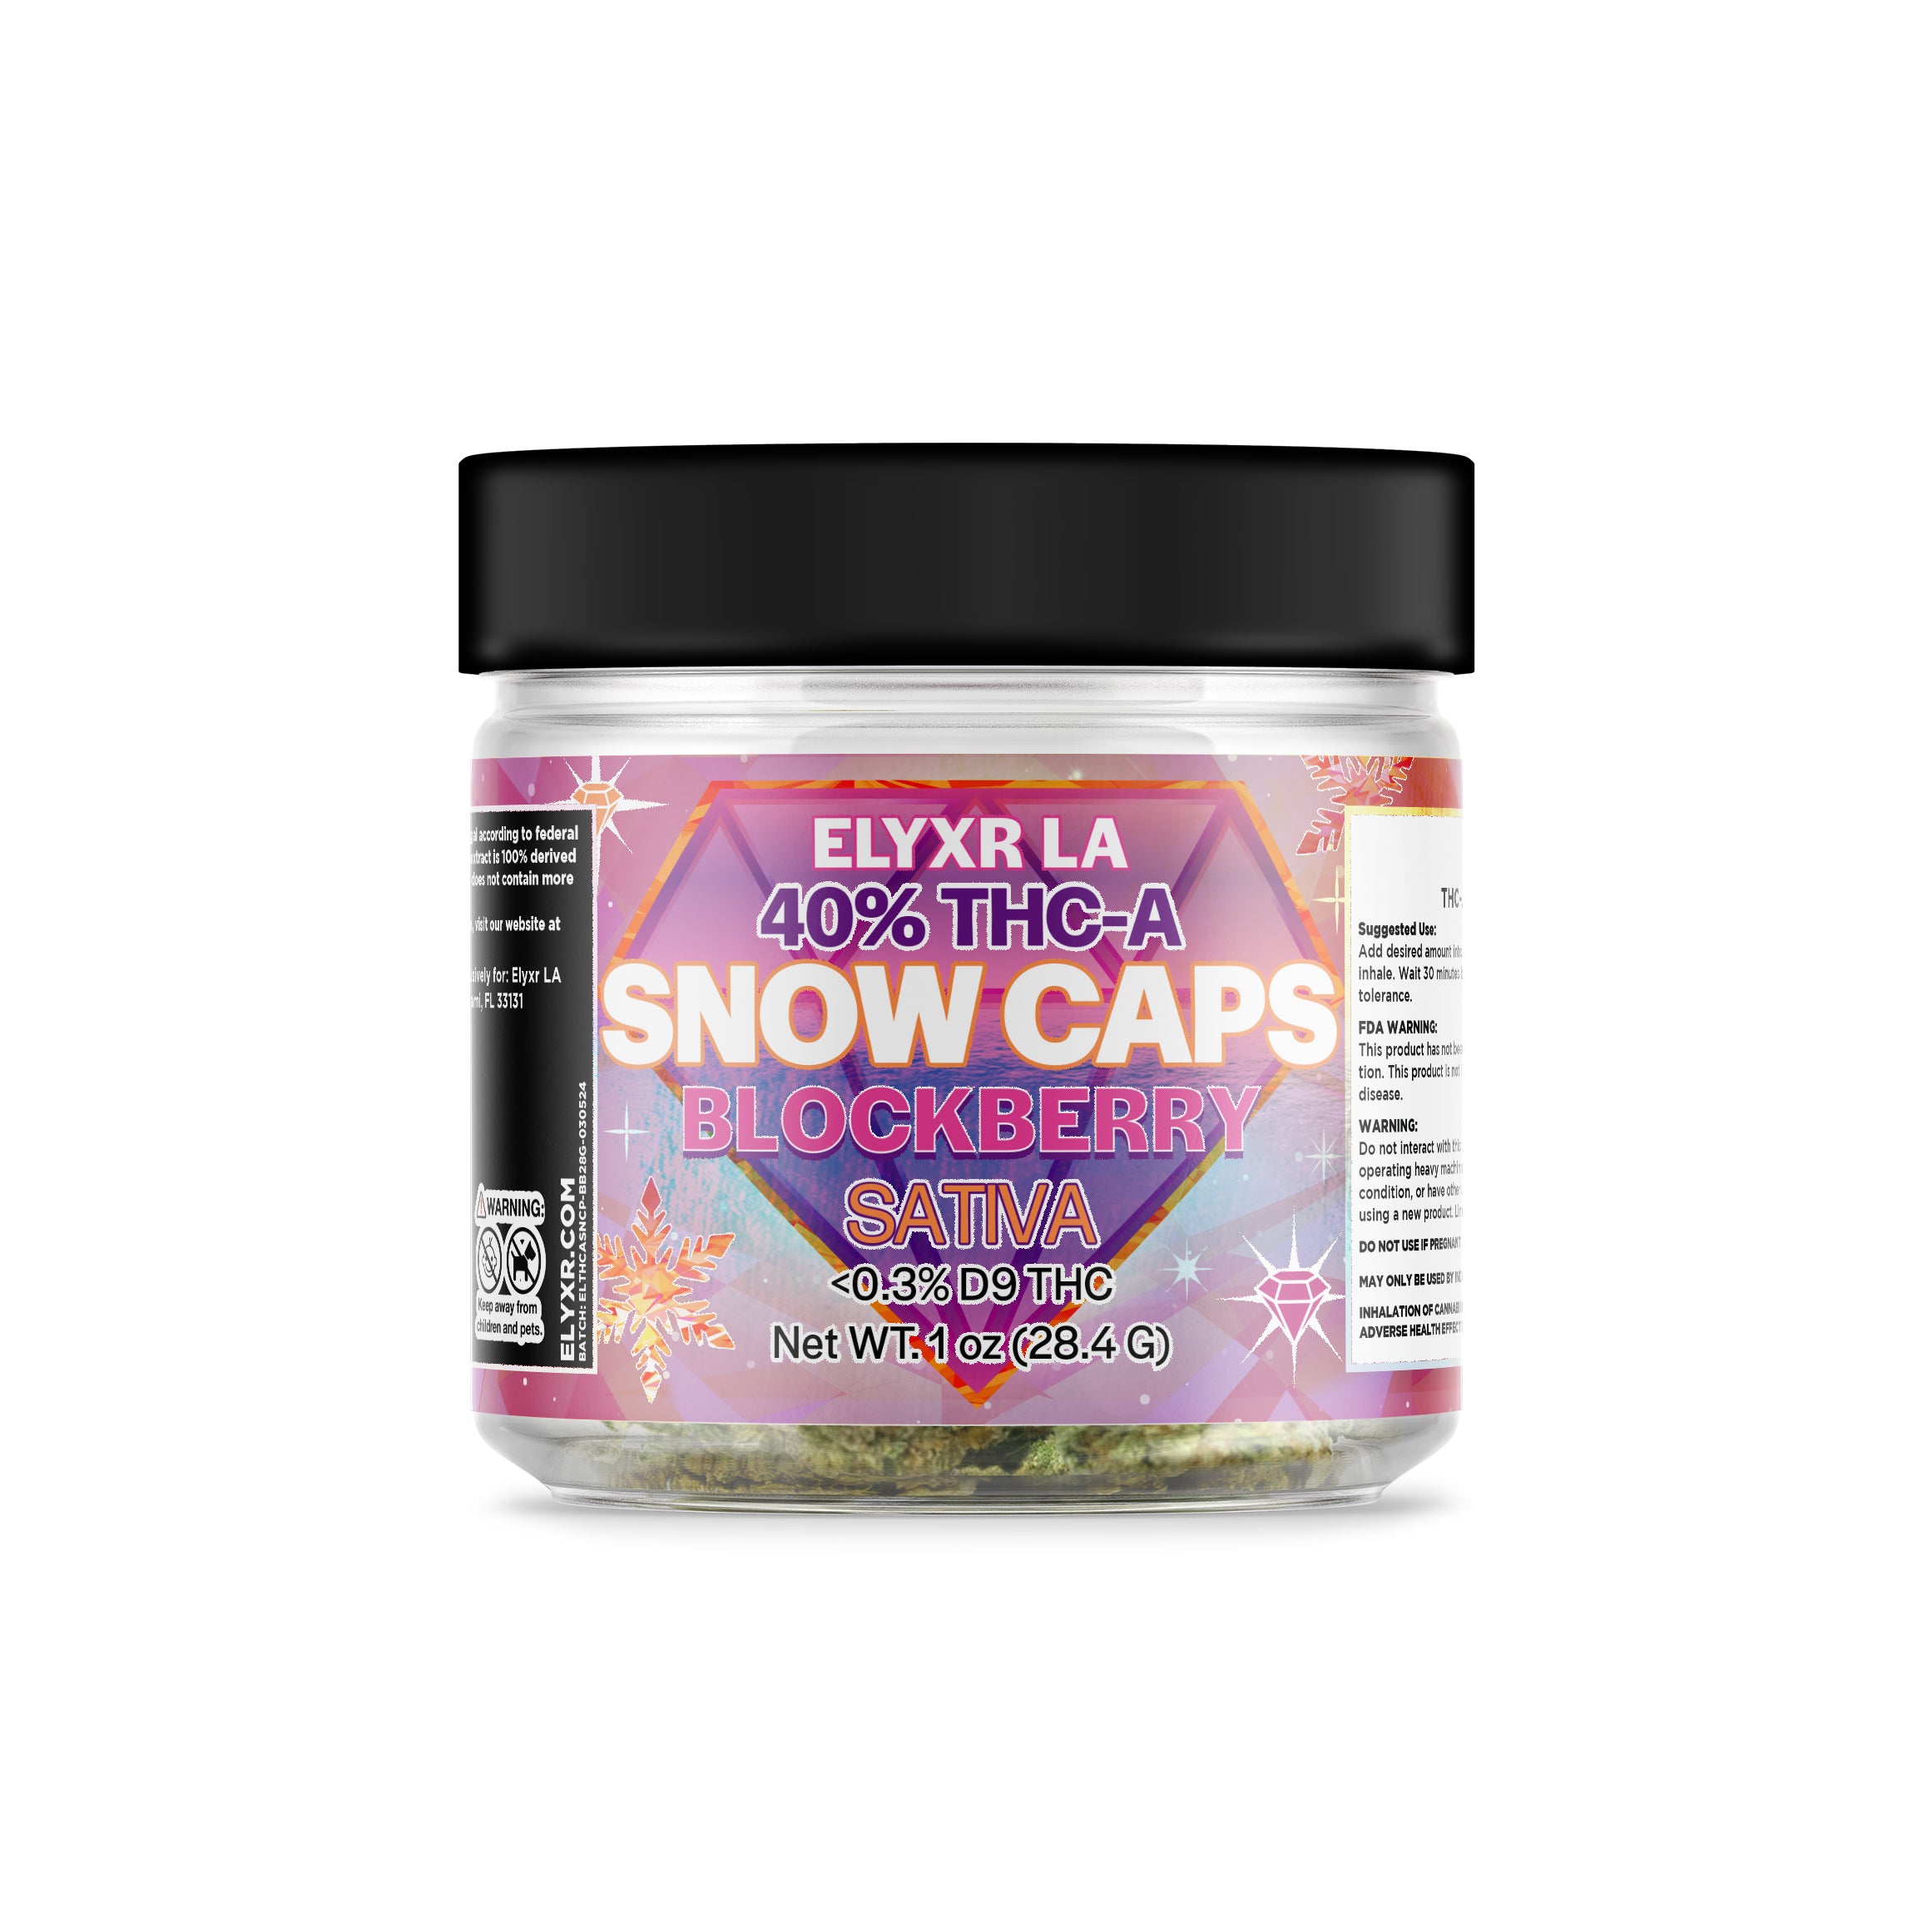 40% THC-A Snow Caps